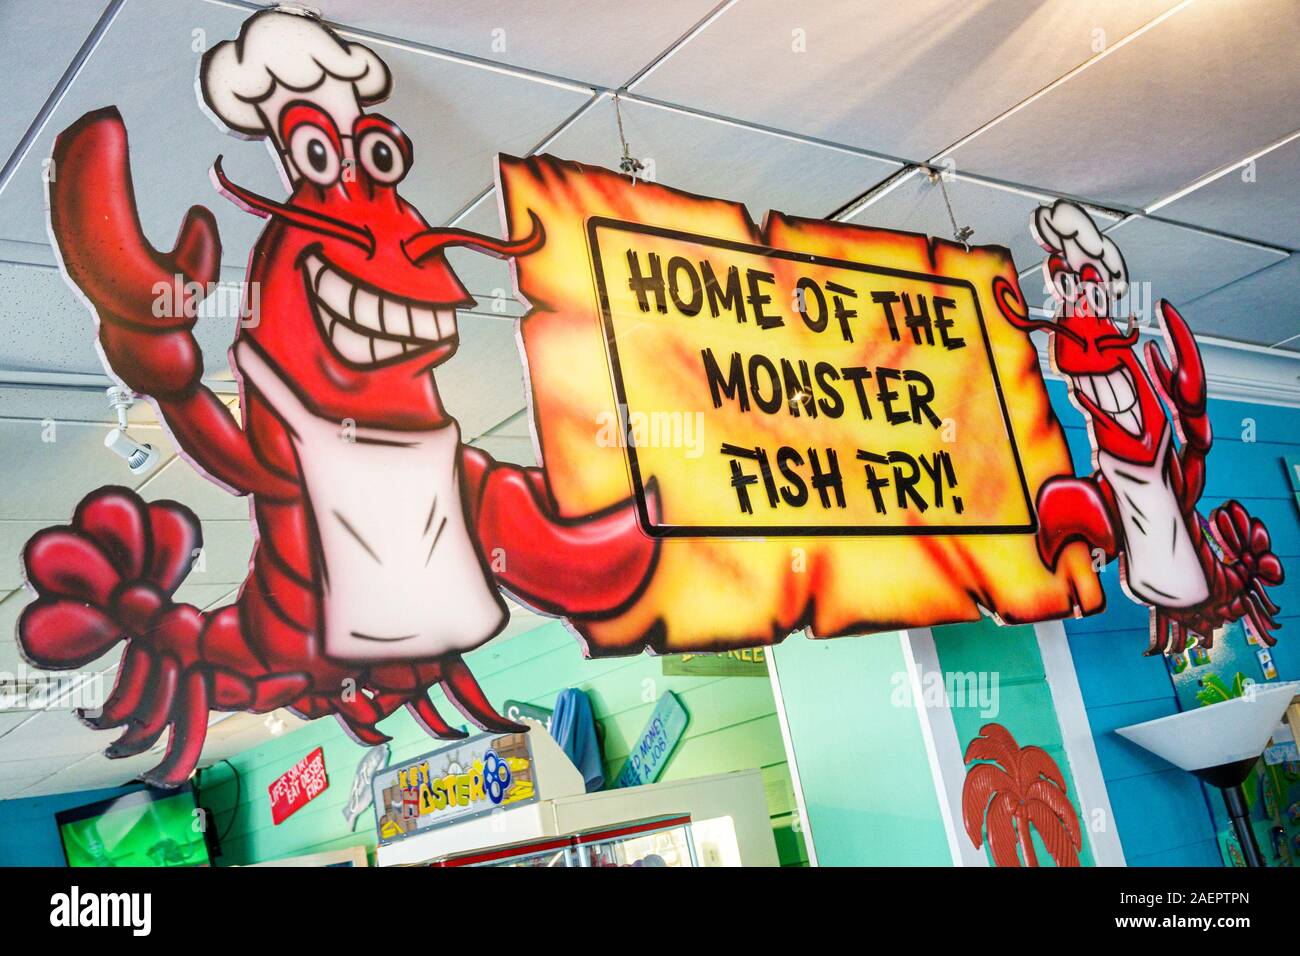 Jensen Beach Florida,Mulligan's Beach House Bar & Grill, restaurant,seafood,marketing,sign,fish fry advertisement ad,FL190920044 Stock Photo